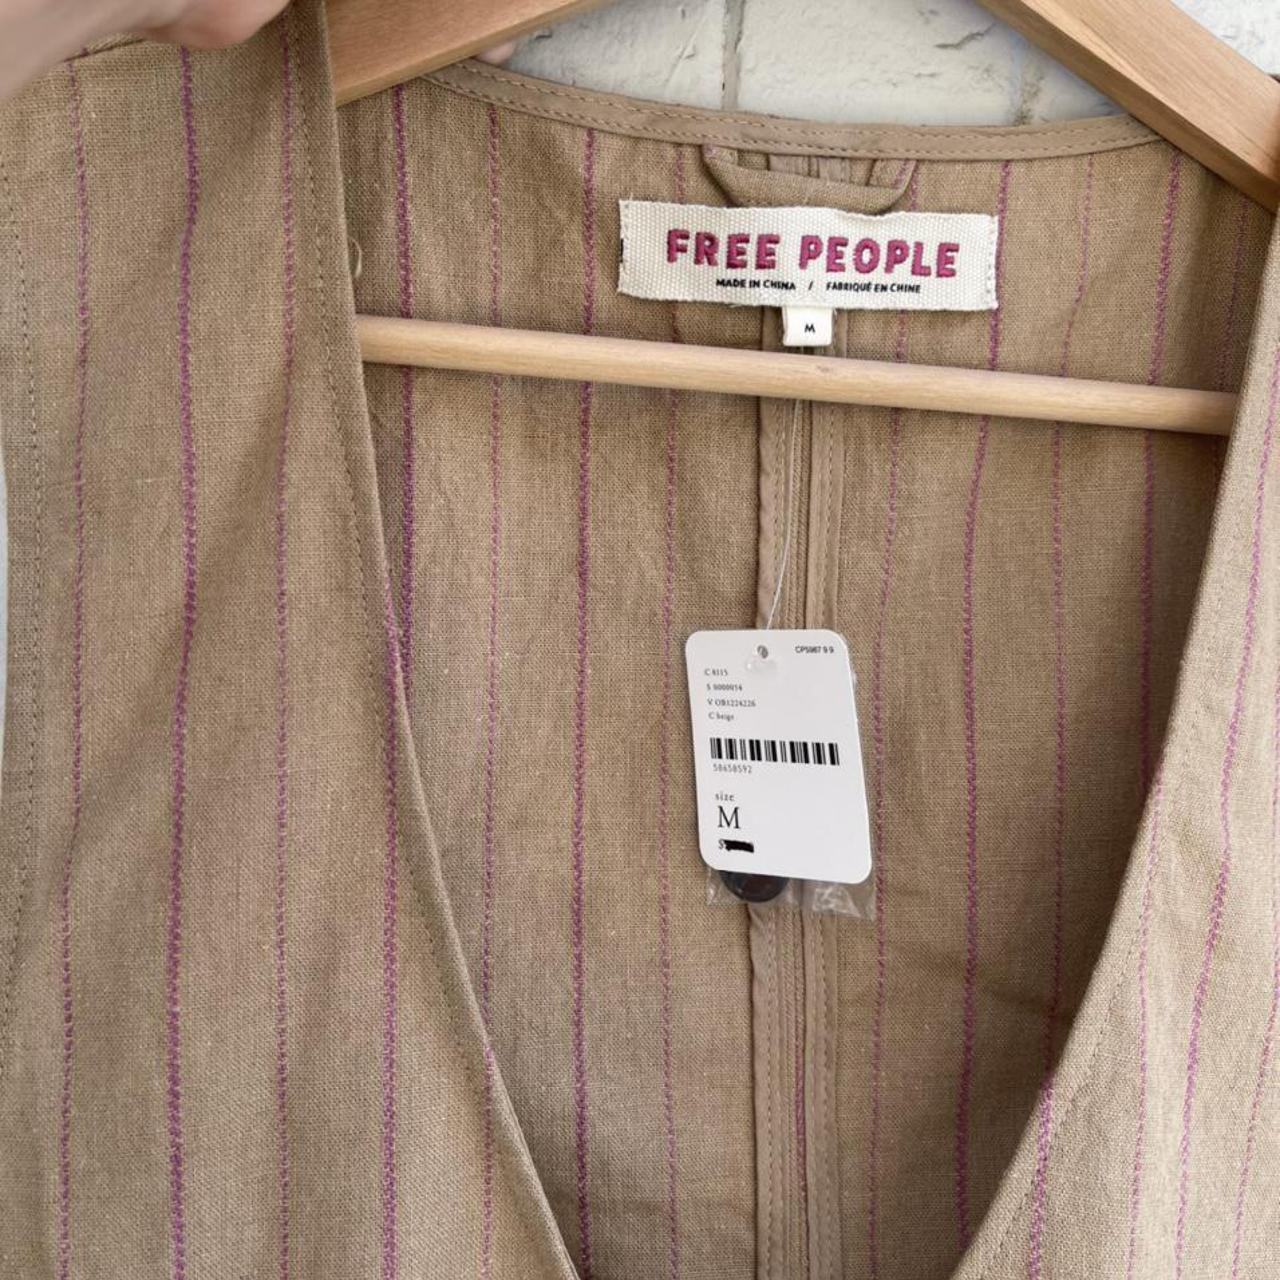 Product Image 3 - NWT Free People vest 

-